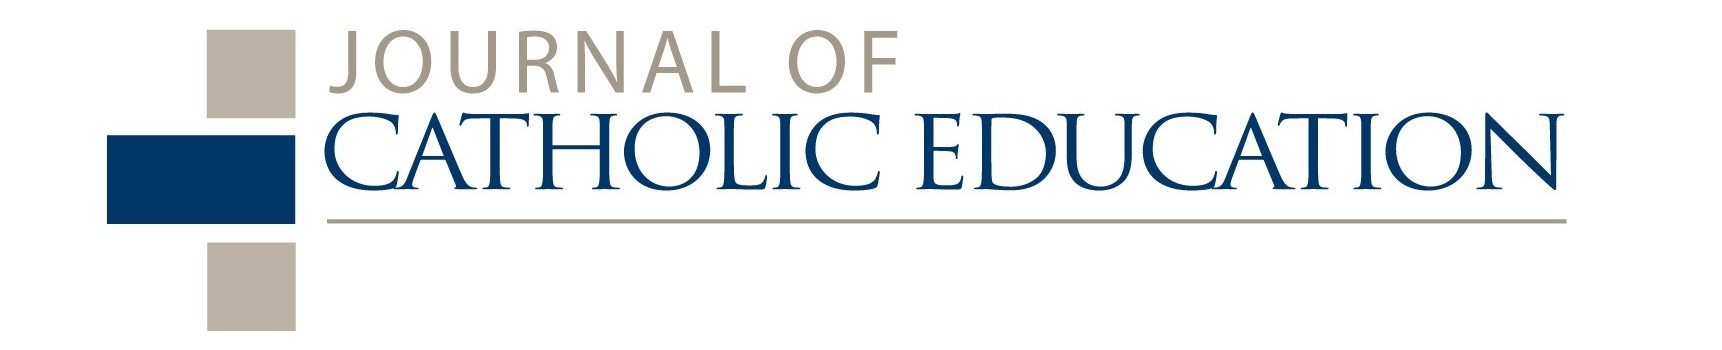 Journal of Catholic Education Pre-Prints